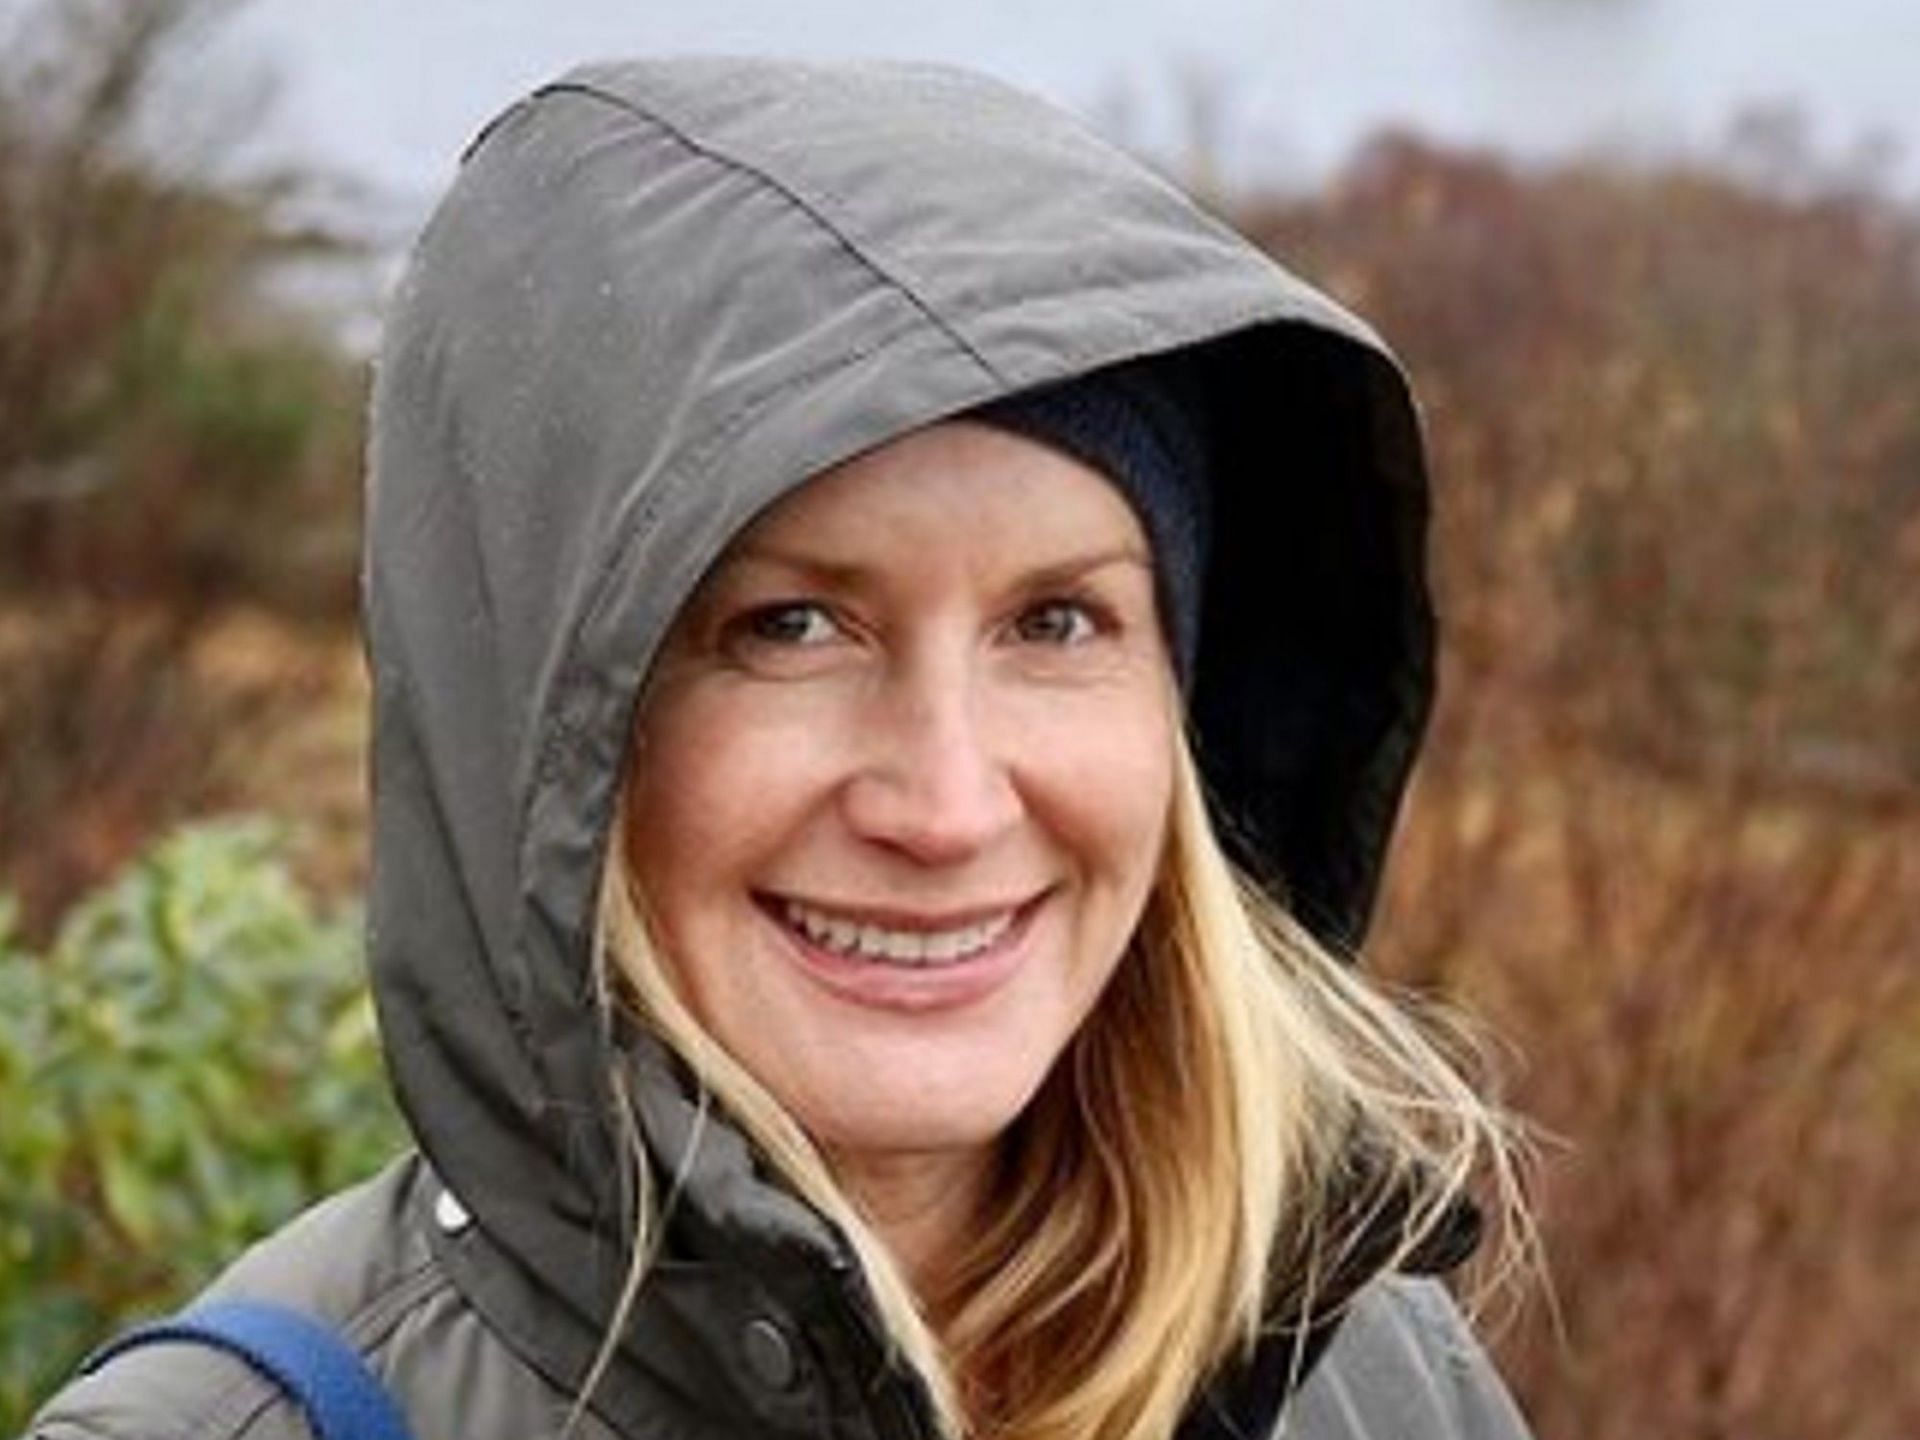 Angela Kinsley with a hood on - Courtesy of Angela Kinsley on Instagram